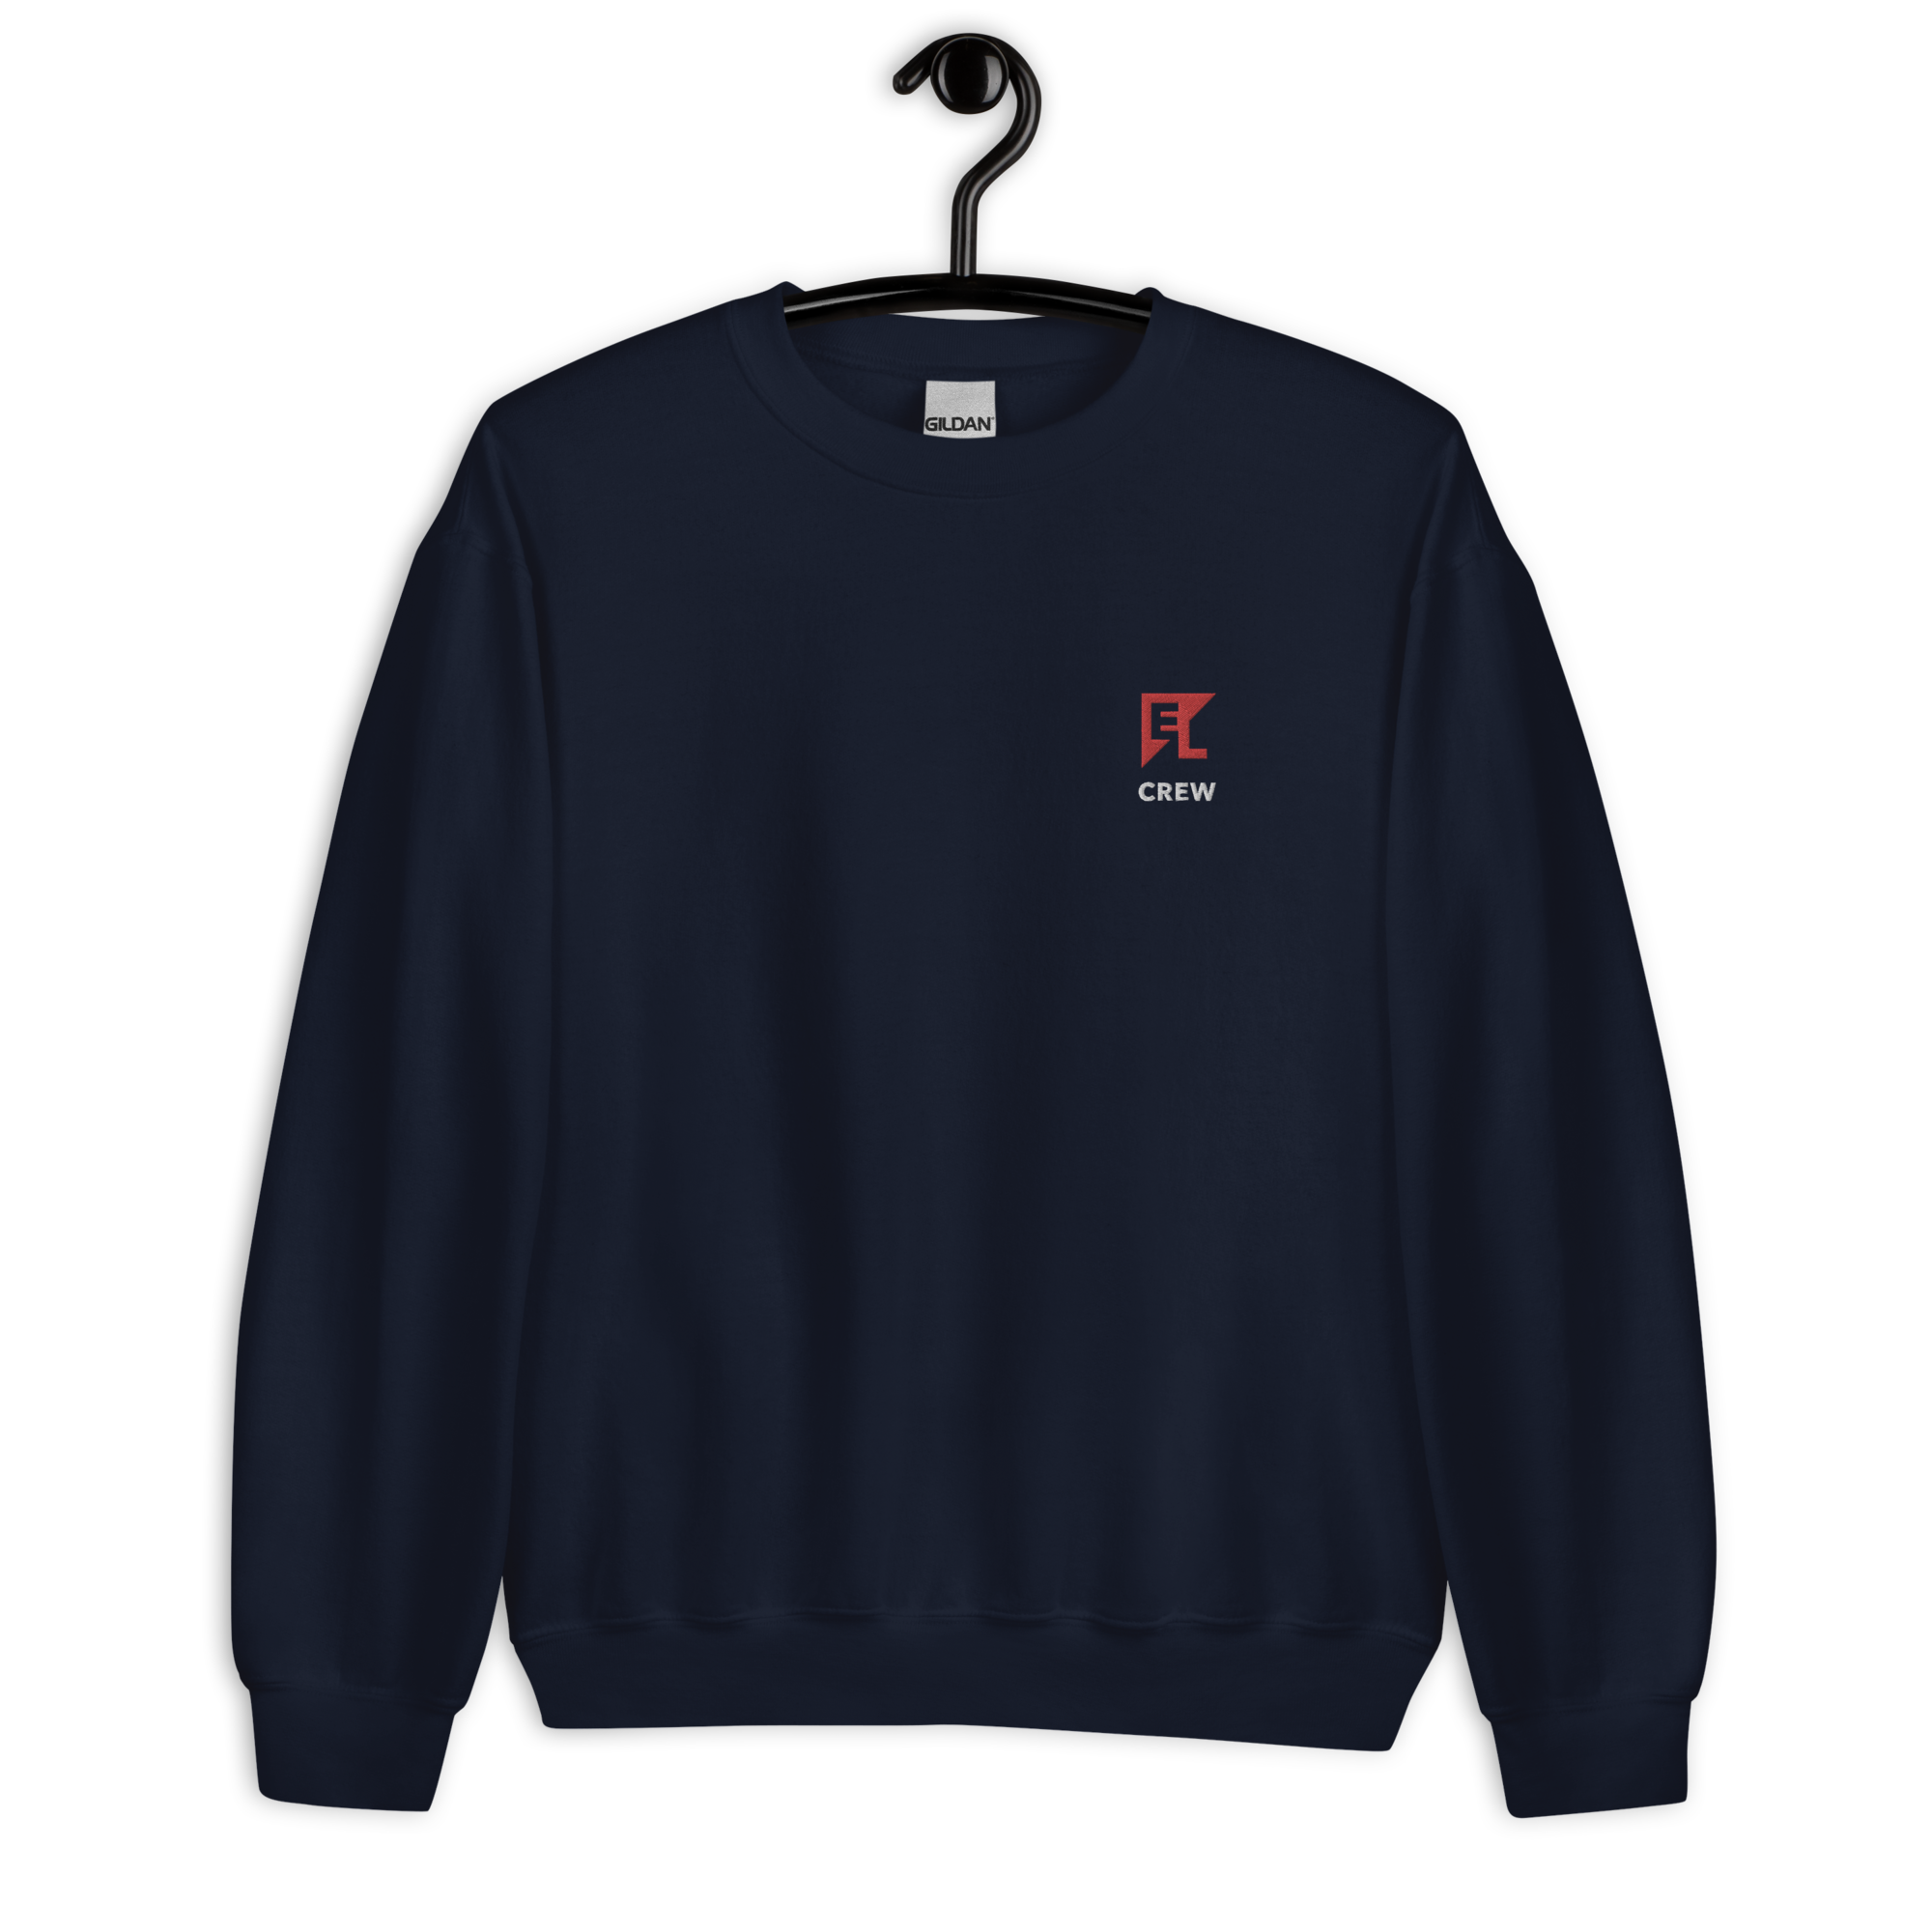 Crew - Unisex Sweatshirt